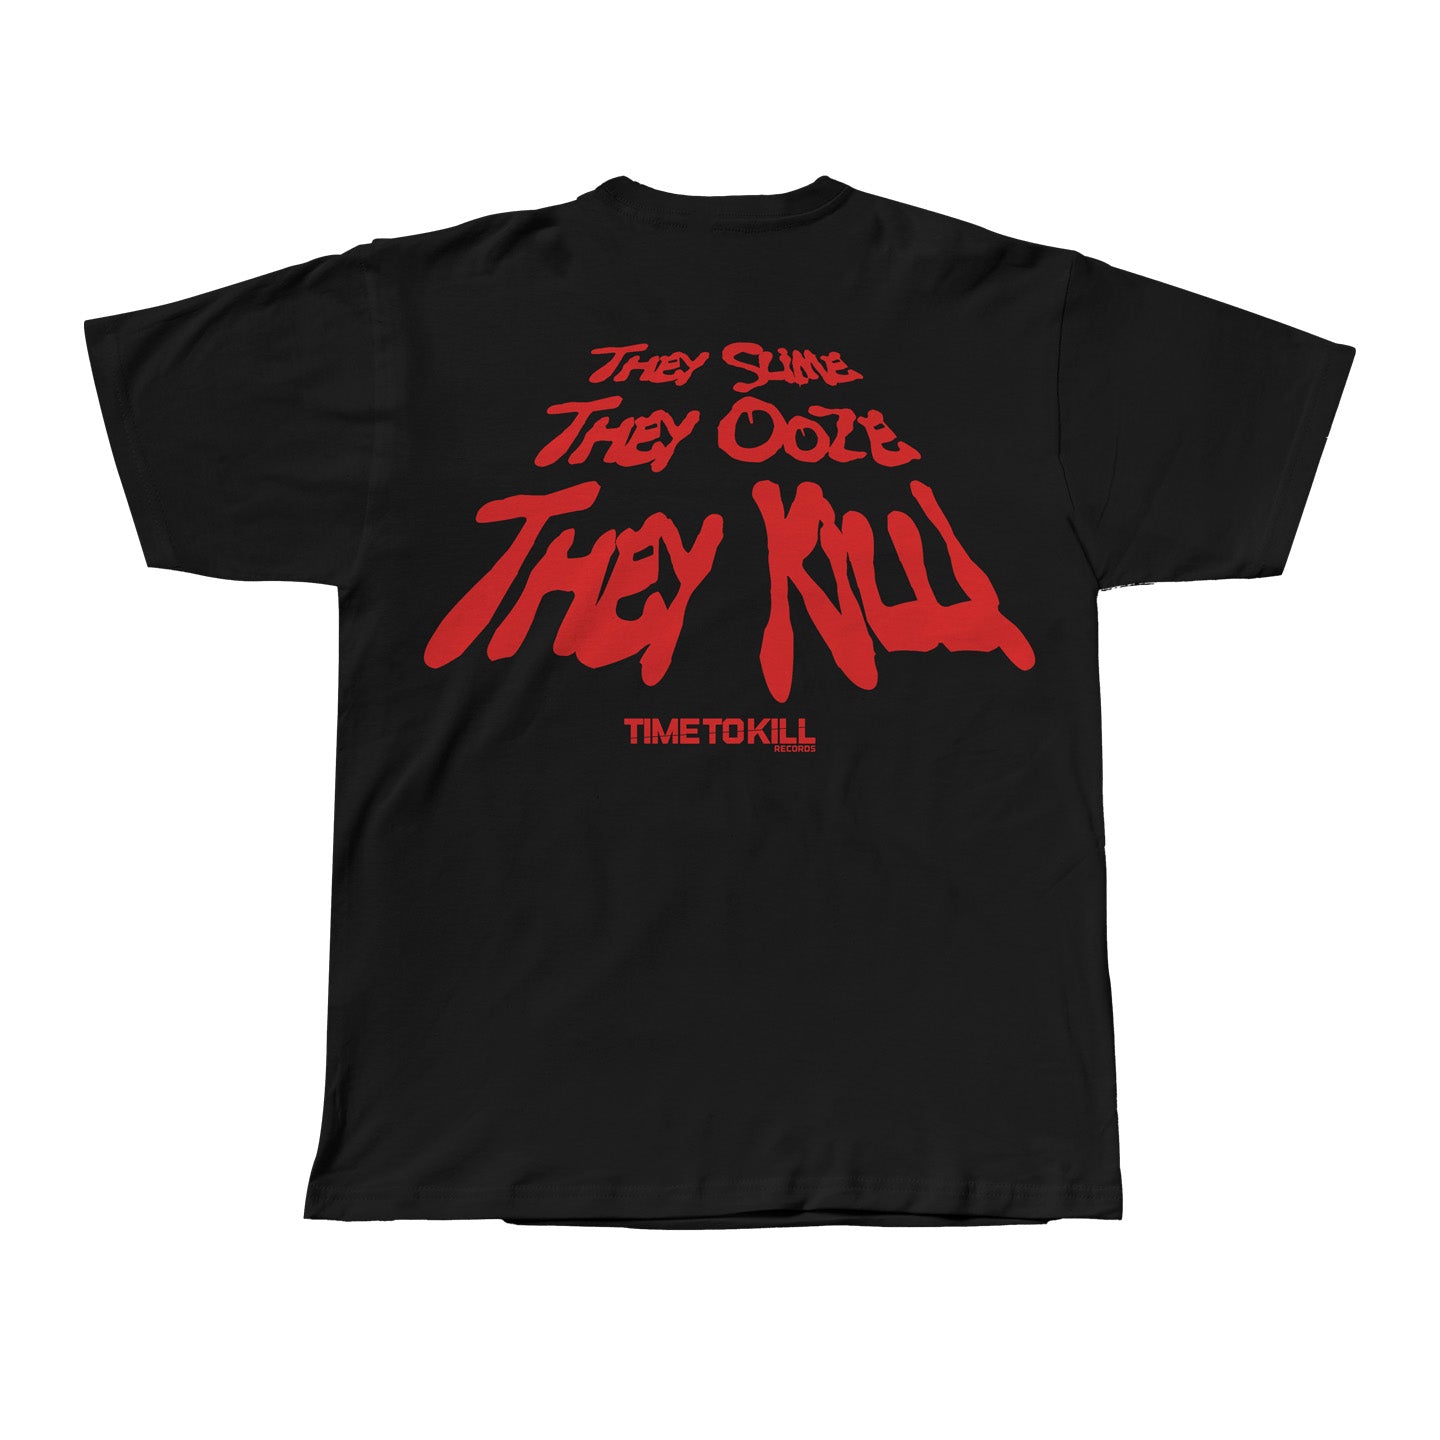 Slug Gore official t-shirt